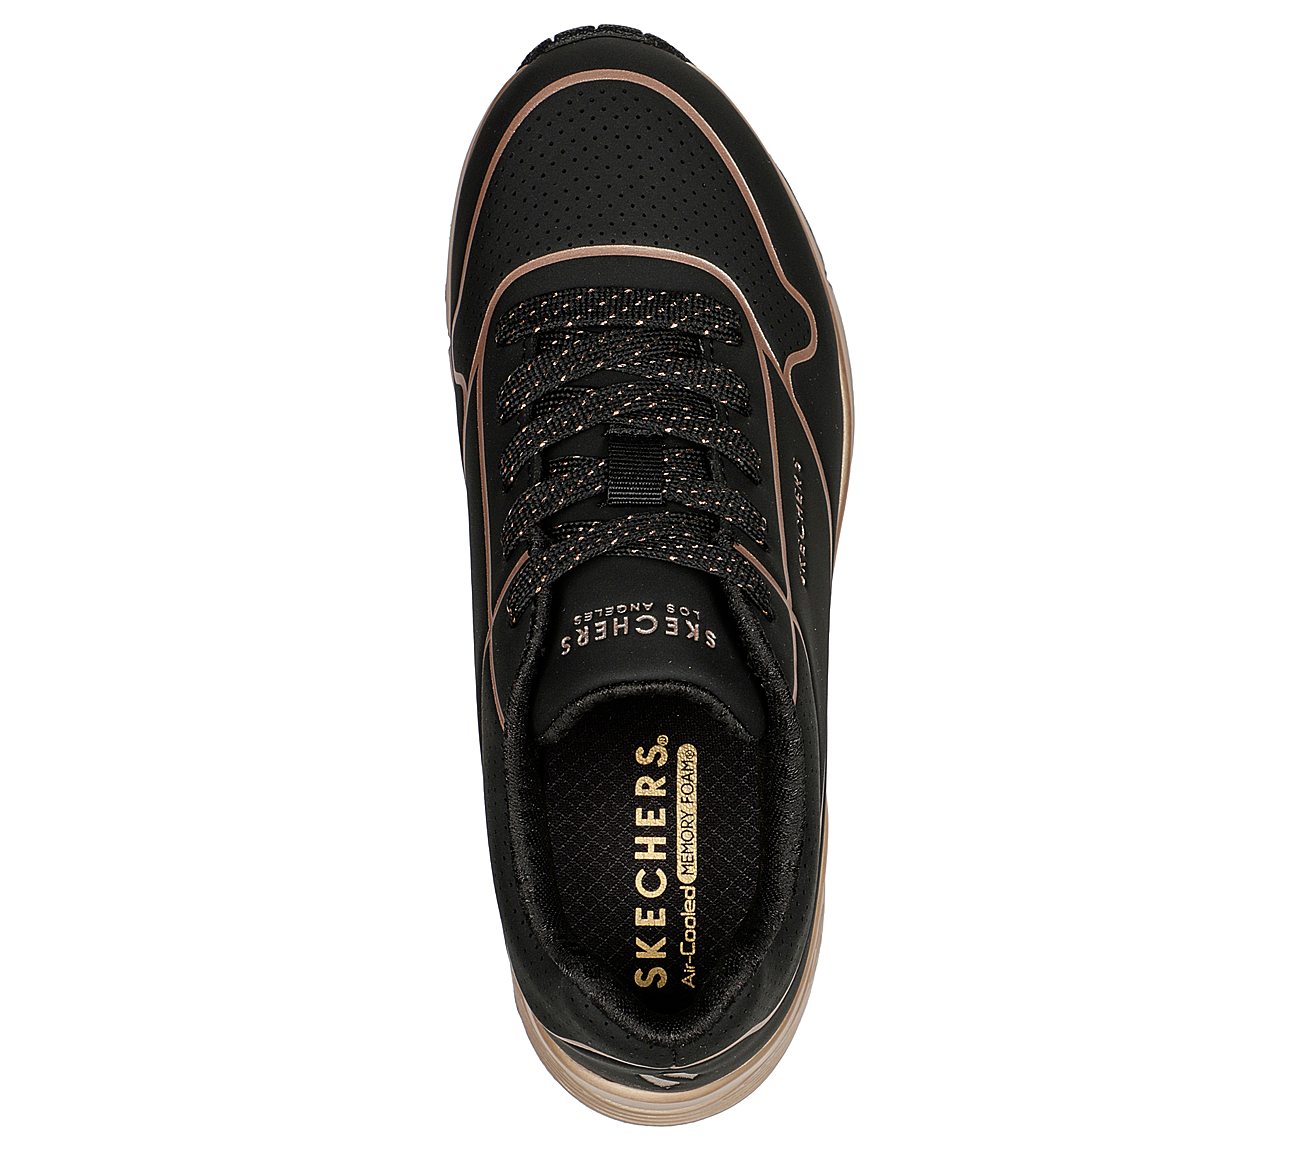 UNO GEN1 - COOL HEELS, BLACK/ROSE GOLD Footwear Top View